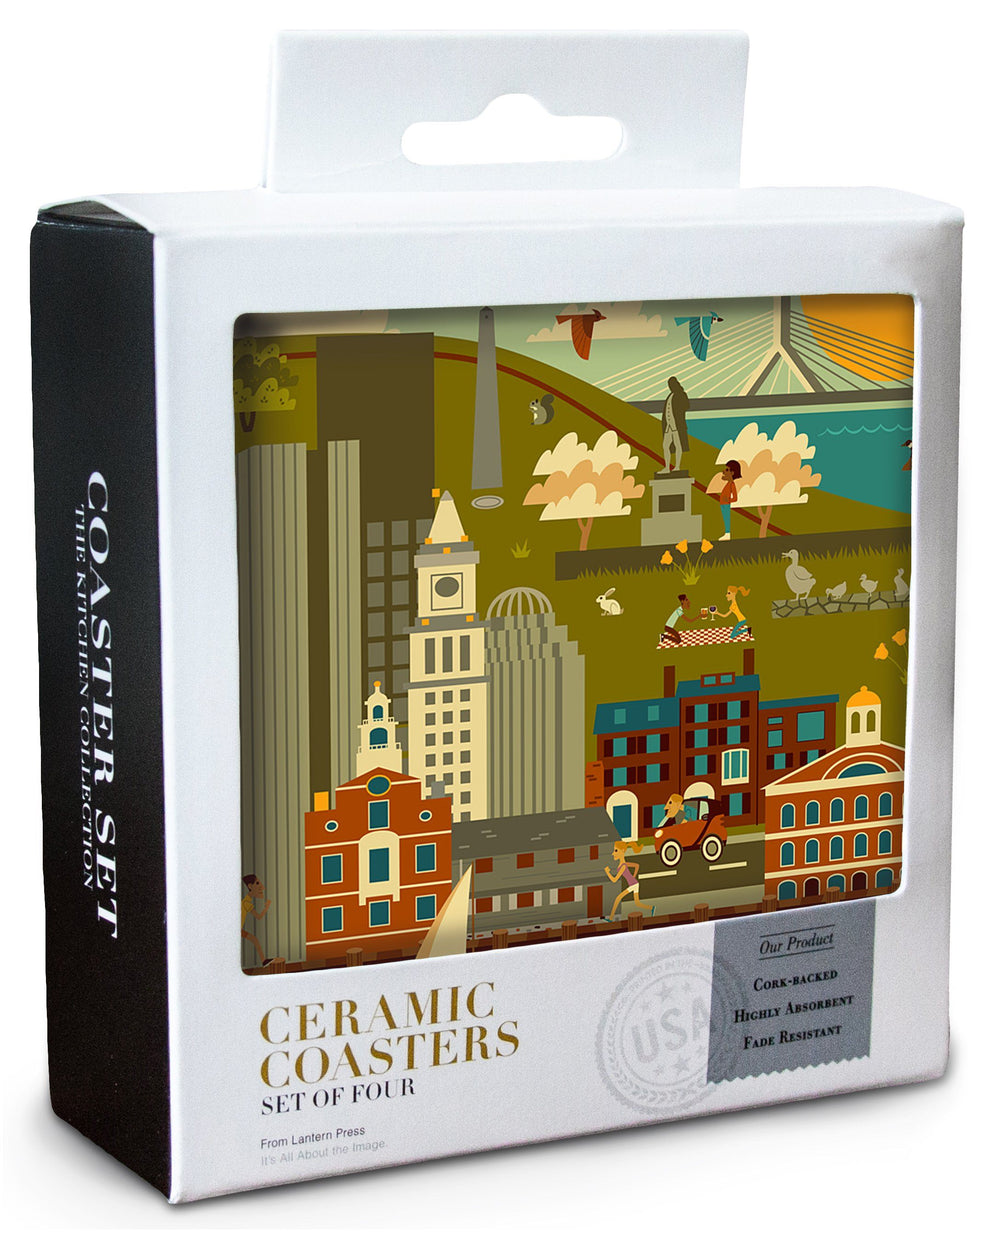 Boston, Massachusetts, Geometric City Series, Lantern Press Artwork, Coaster Set Coasters Lantern Press 